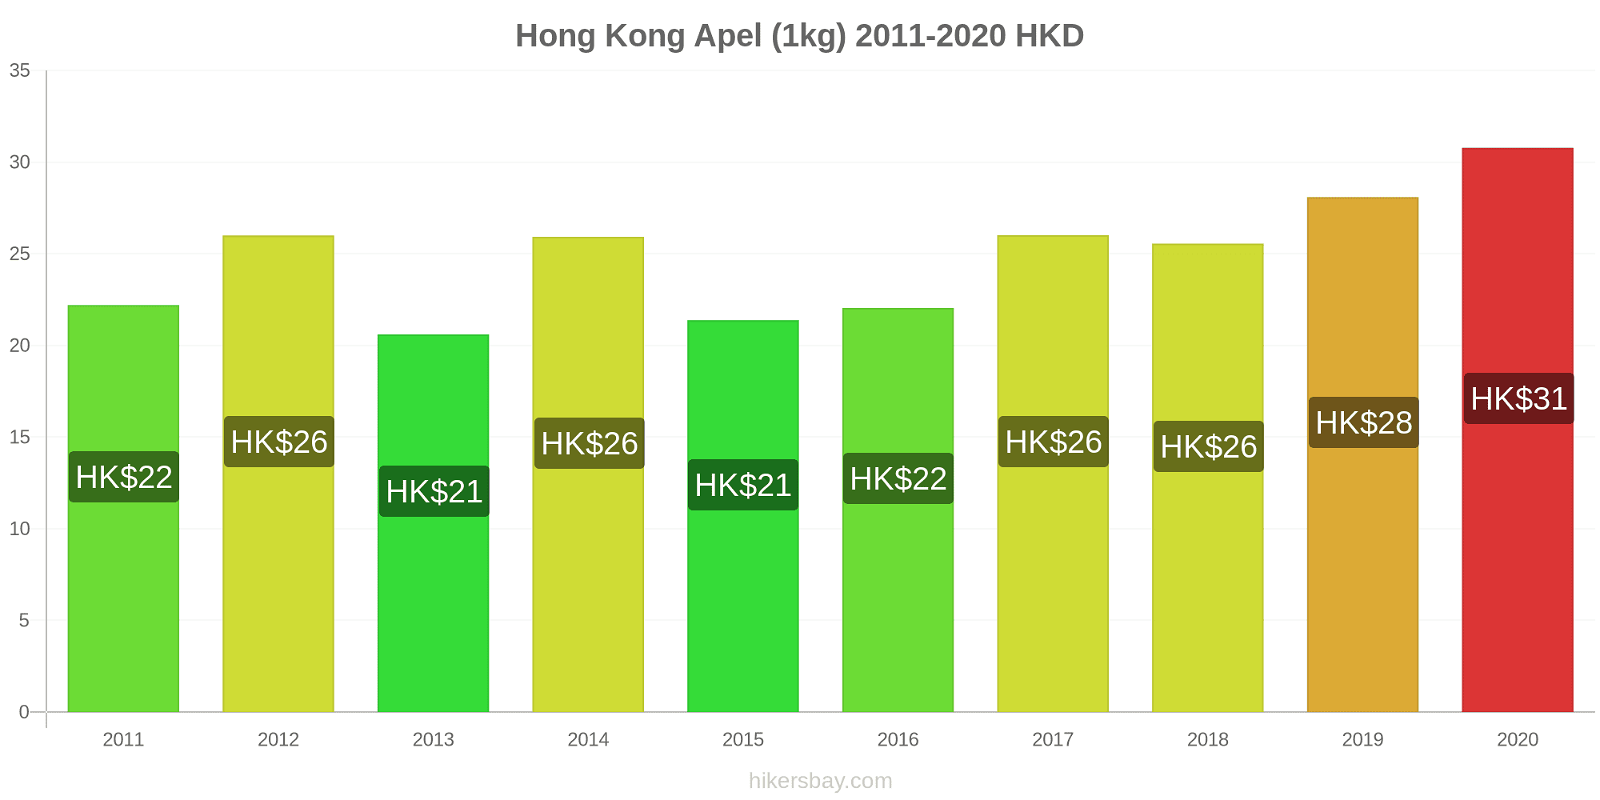 Hong Kong perubahan harga Apel (1kg) hikersbay.com